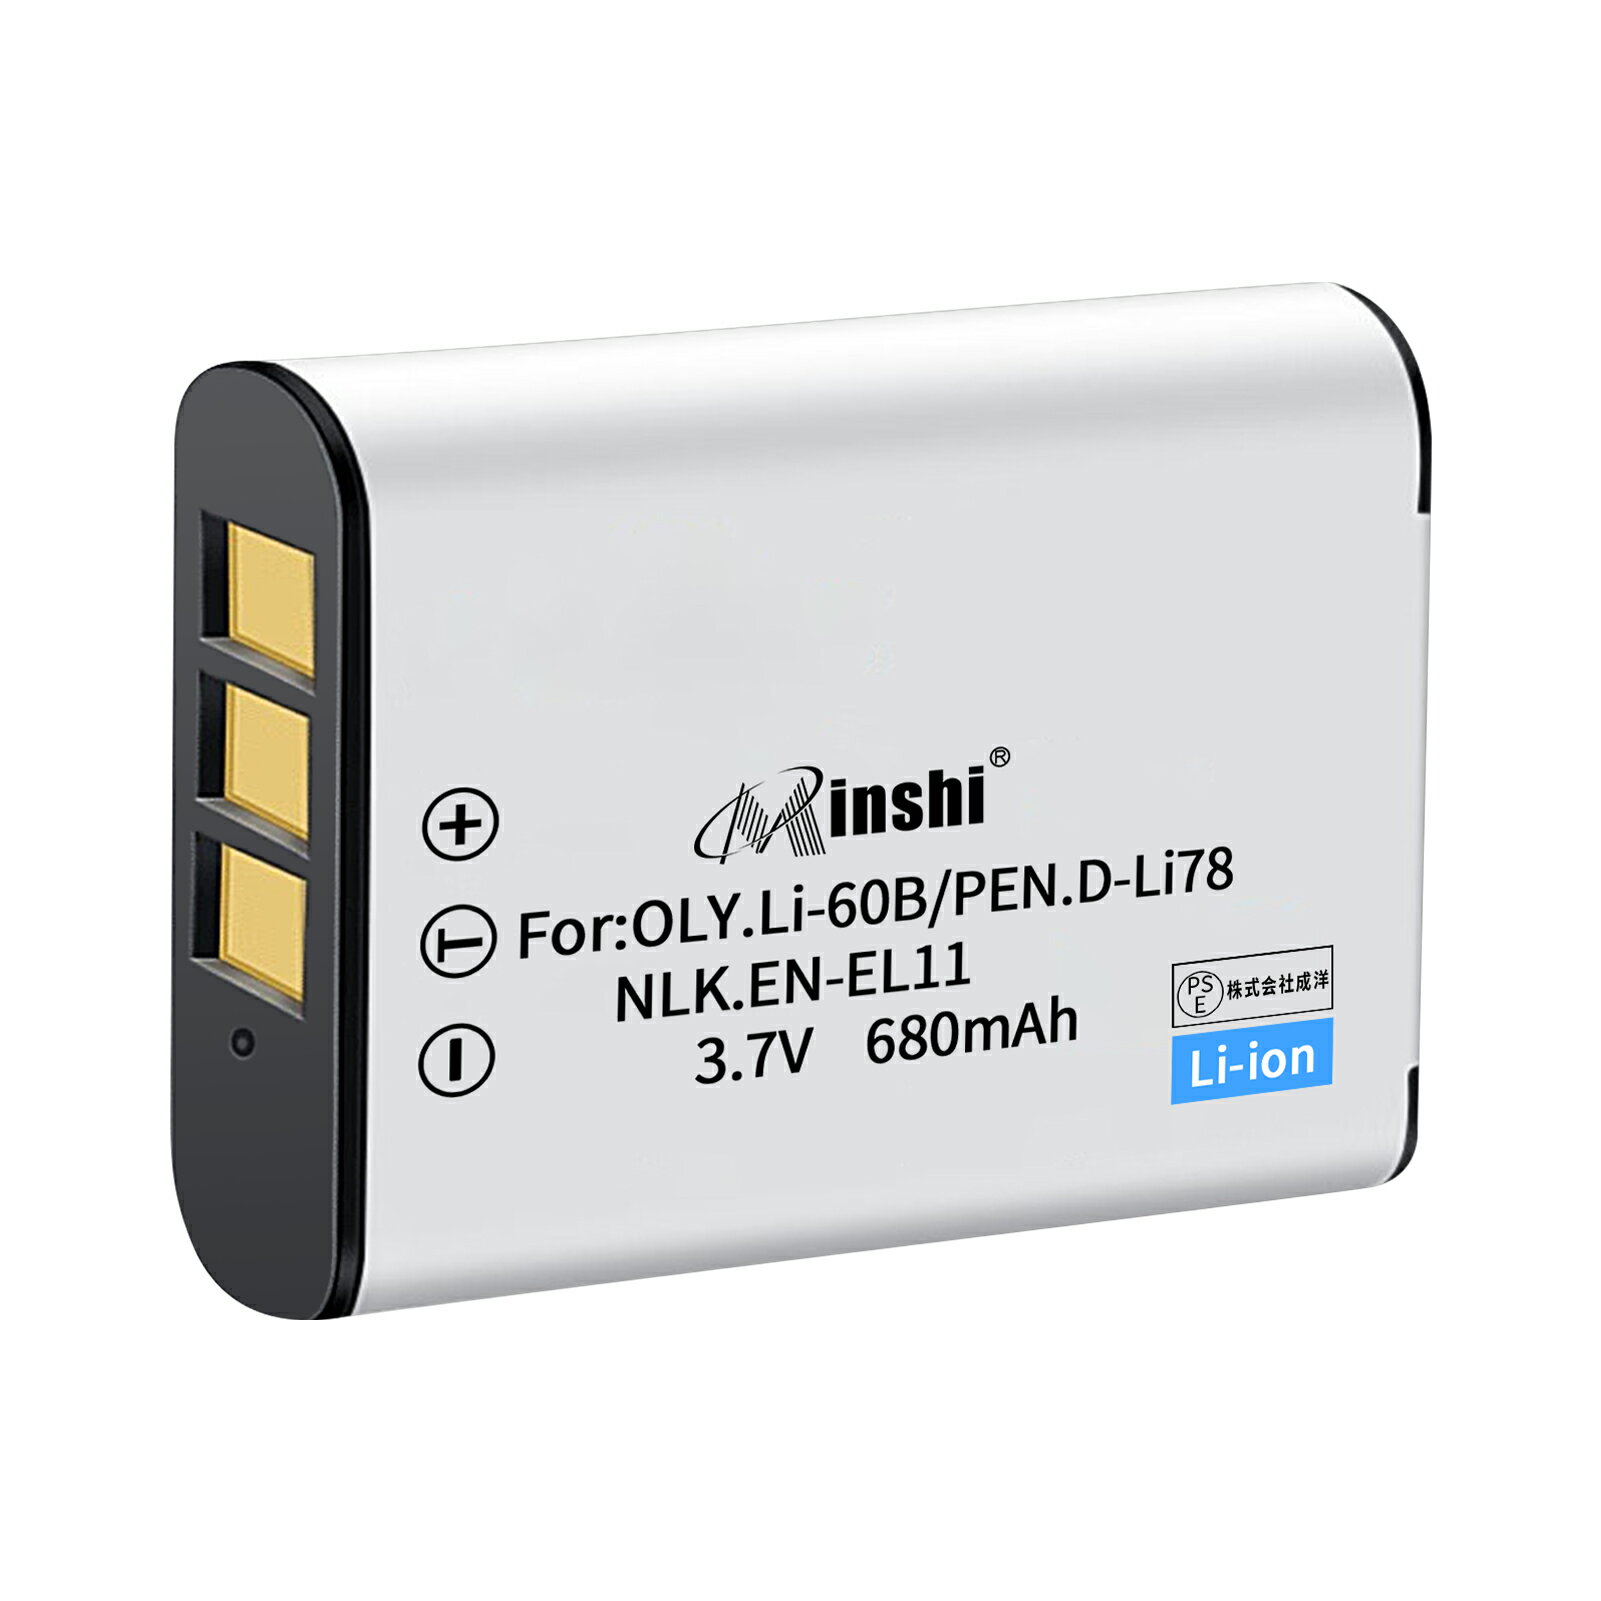 minshi 新品 NIKON Optio M60 互換バッテリー 680mAh 高品質交換用リチャージブル カメラバッテリー リチウムイオンバッテリー 充電池 PSE認証 1年間保証 オリジナル充電器との互換性がない 予備バッテリー